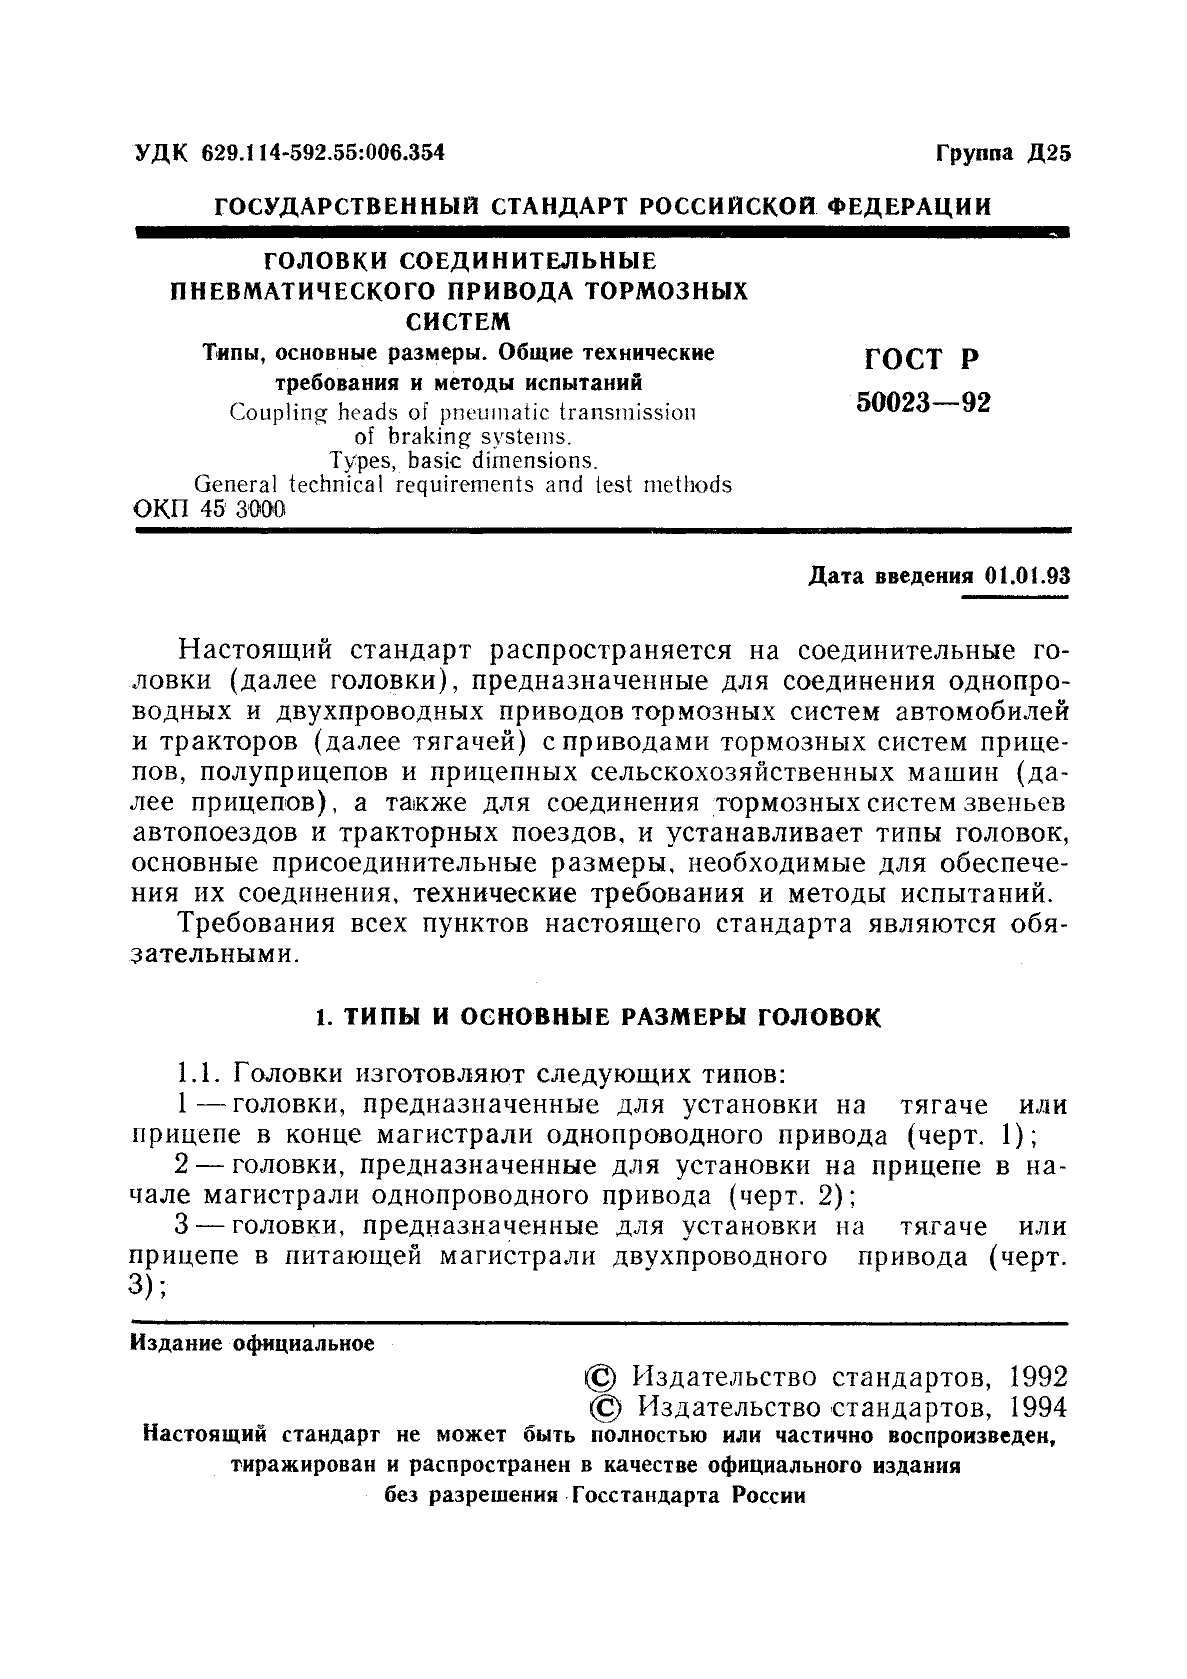 ГОСТ Р 50023-92